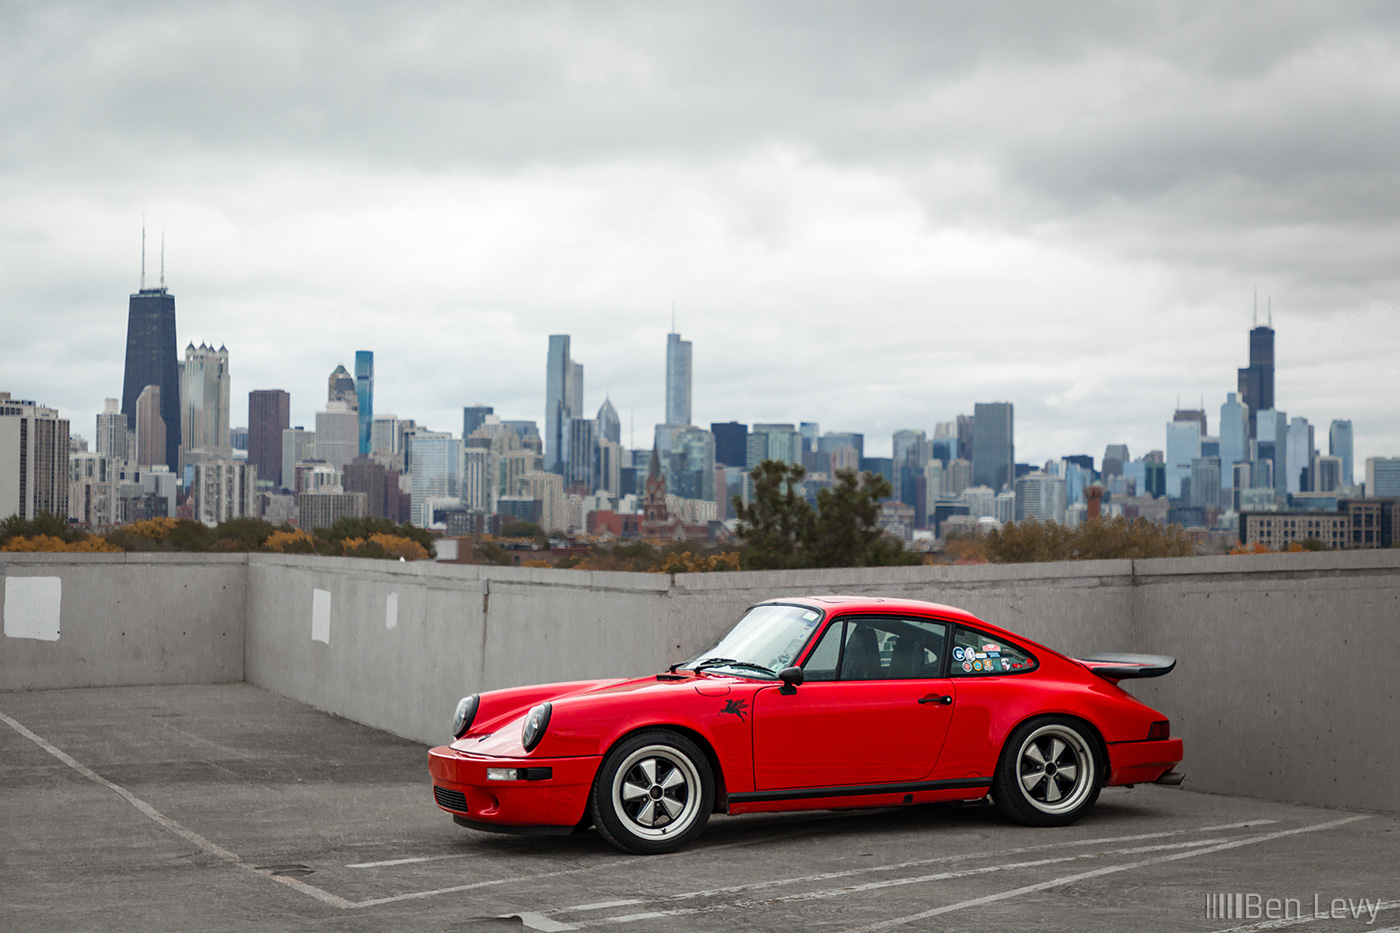 Red Porsche 911 and the Chicago Skyline